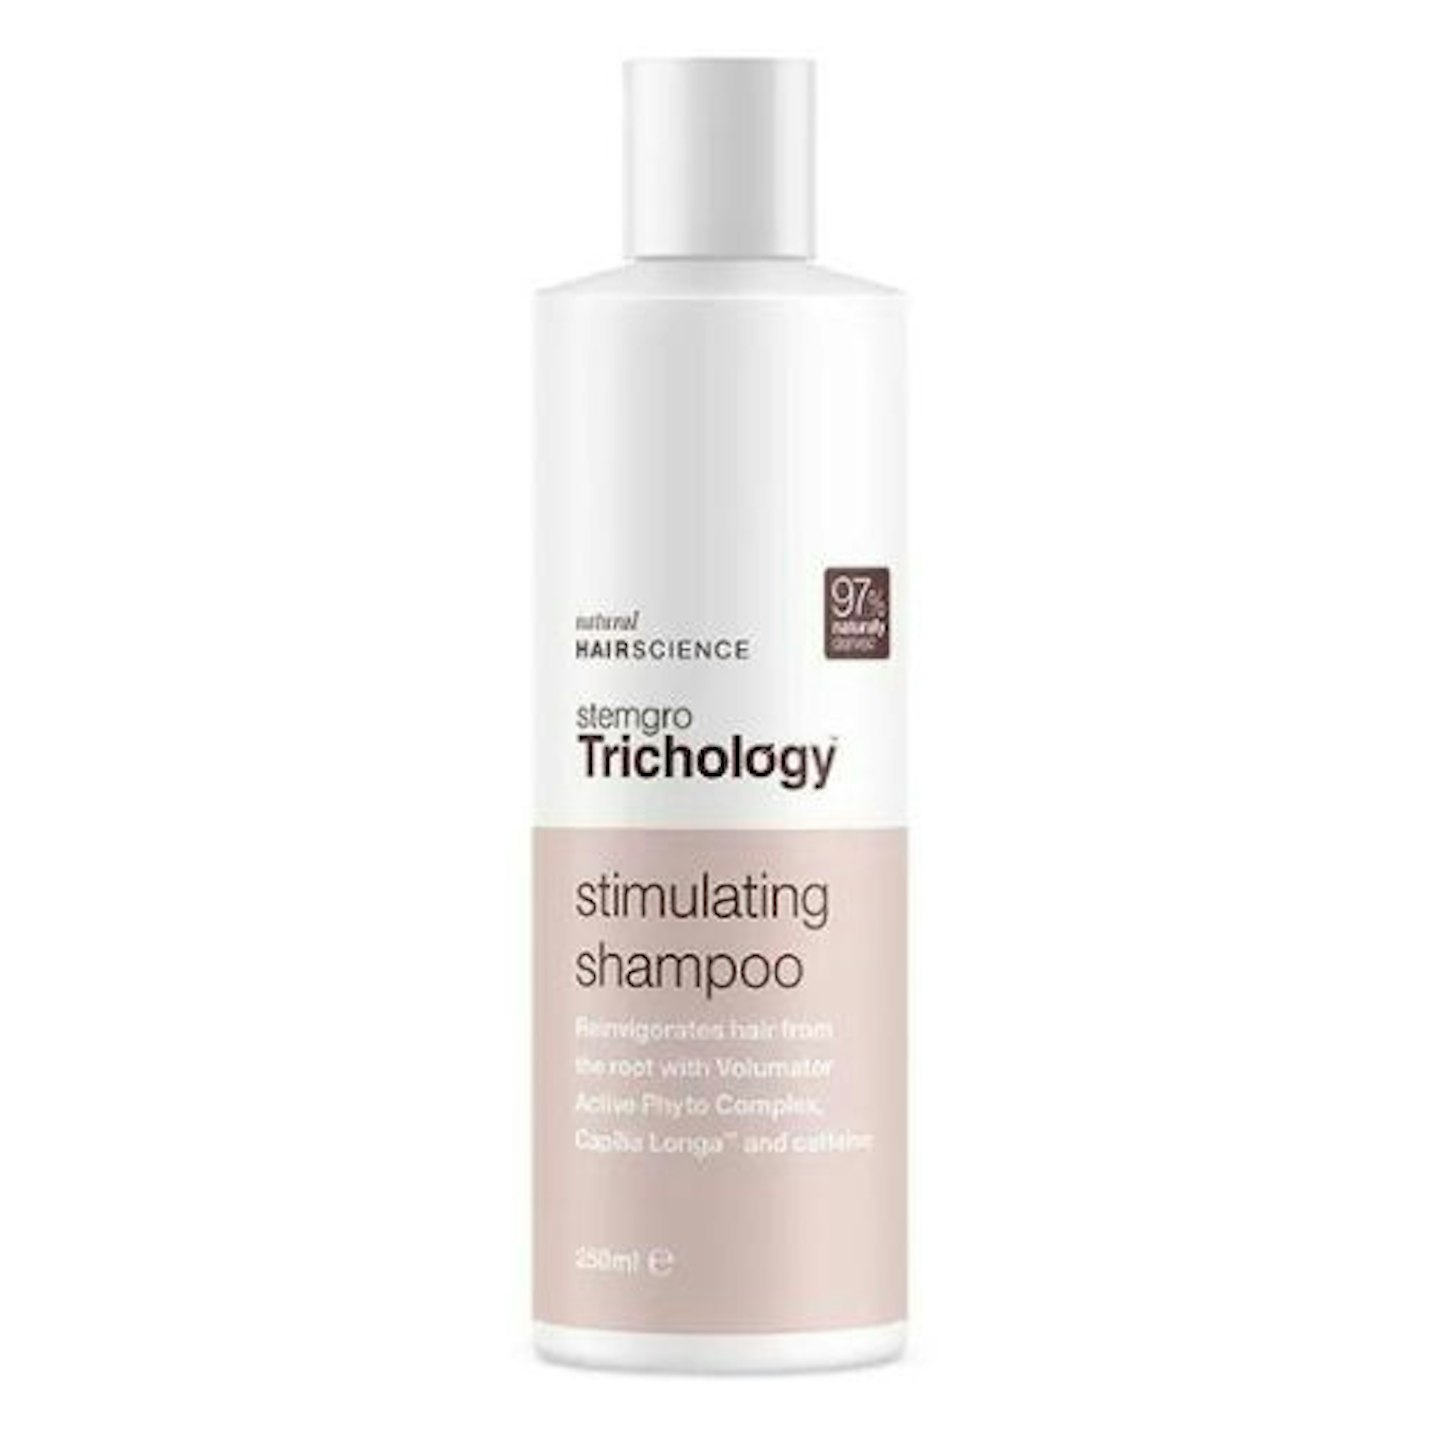 Stemgro Trichology Stimulating Shampoo